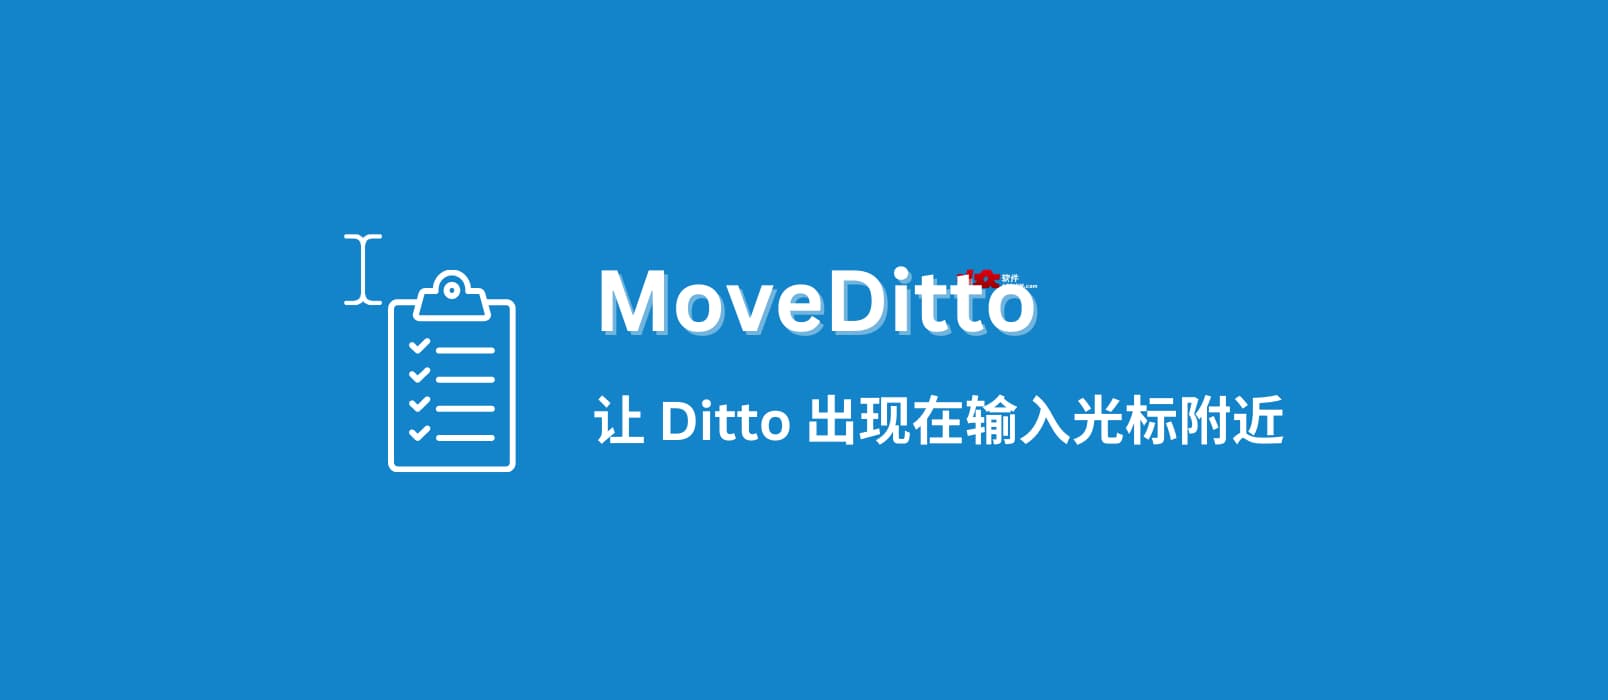 MoveDitto - 让 Ditto 出现在输入光标附近 1